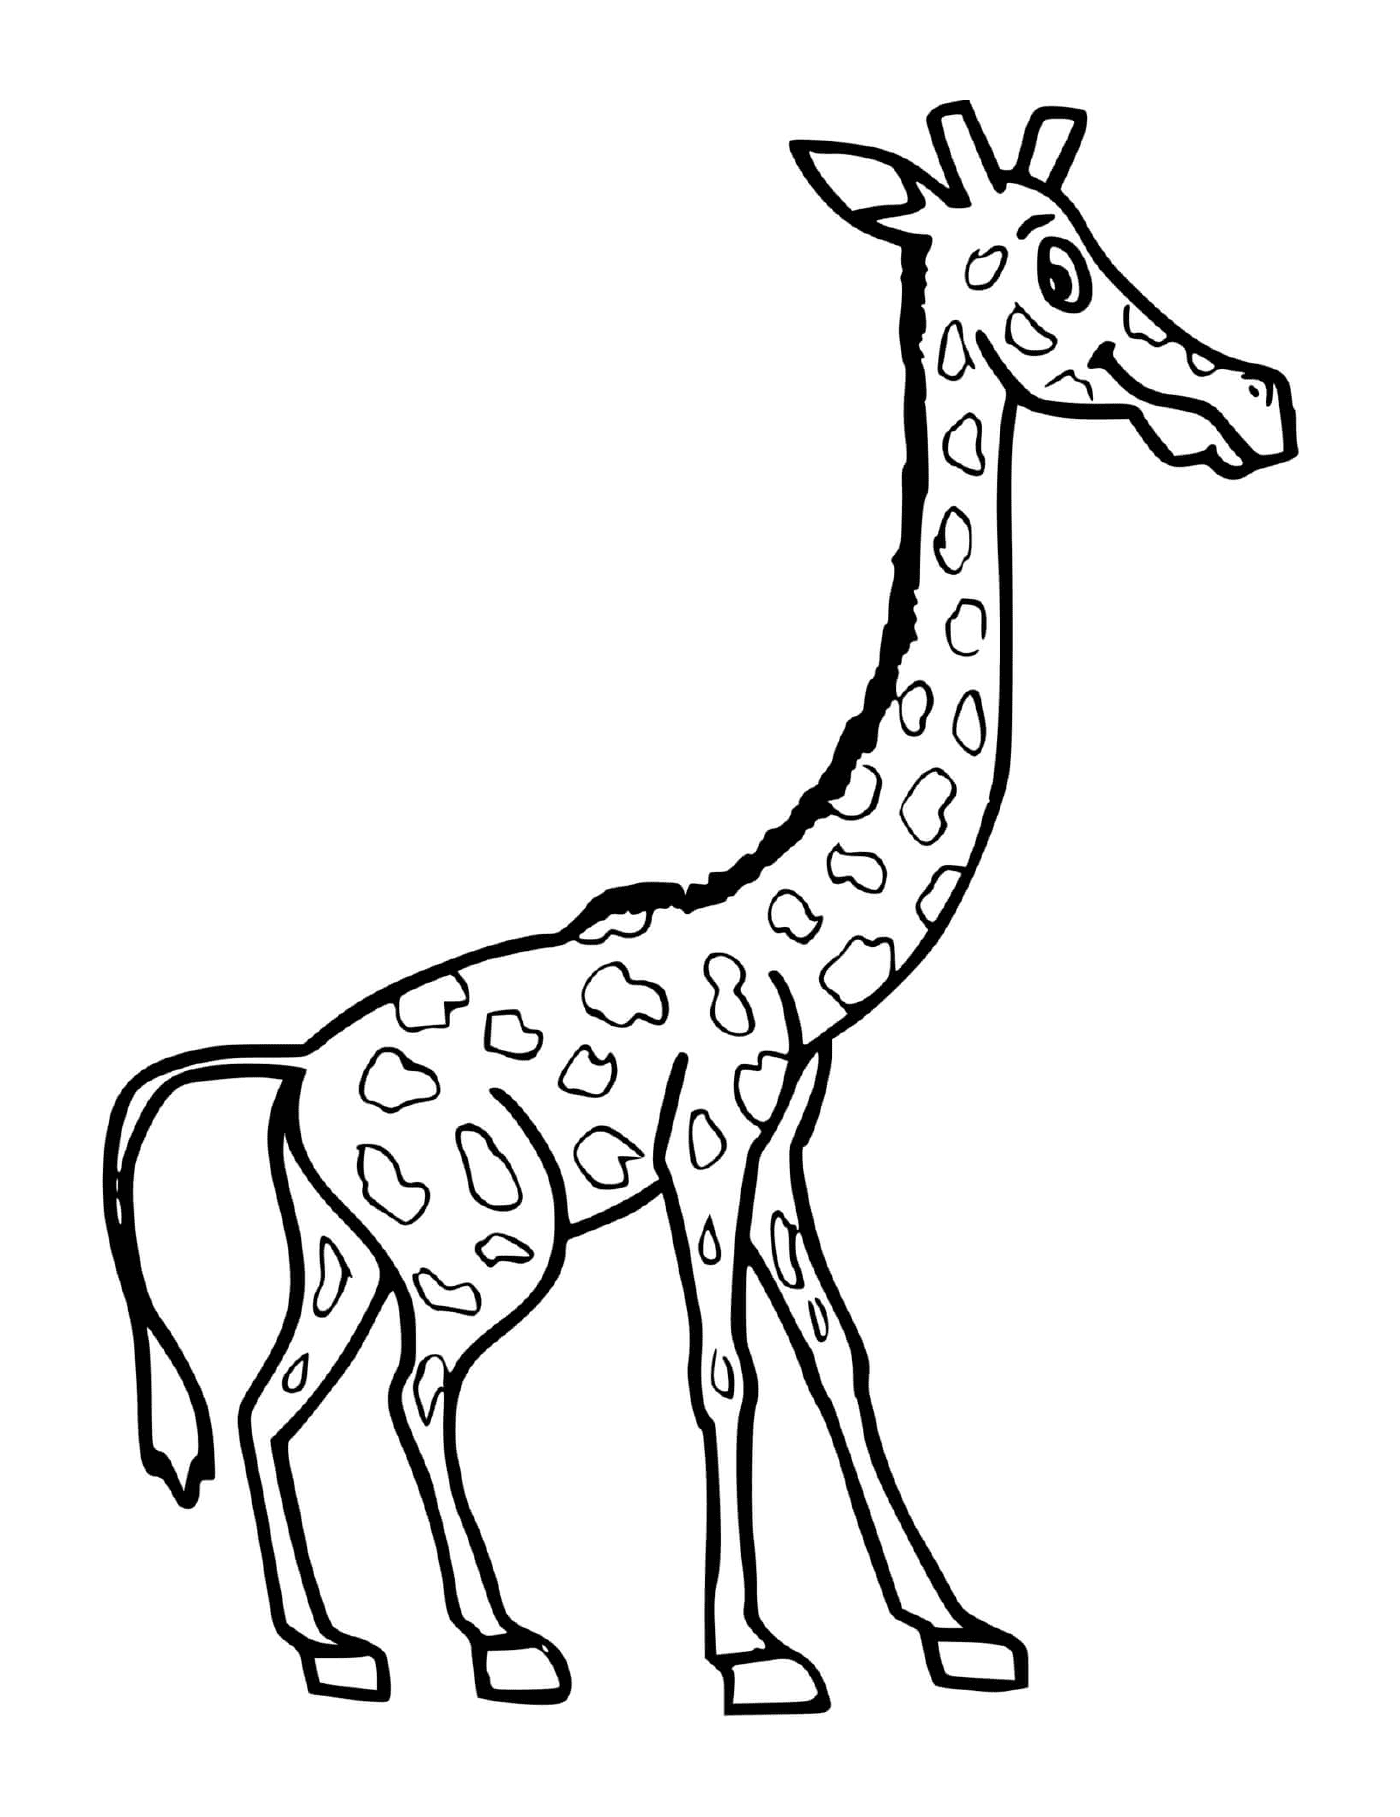   Une grande girafe 